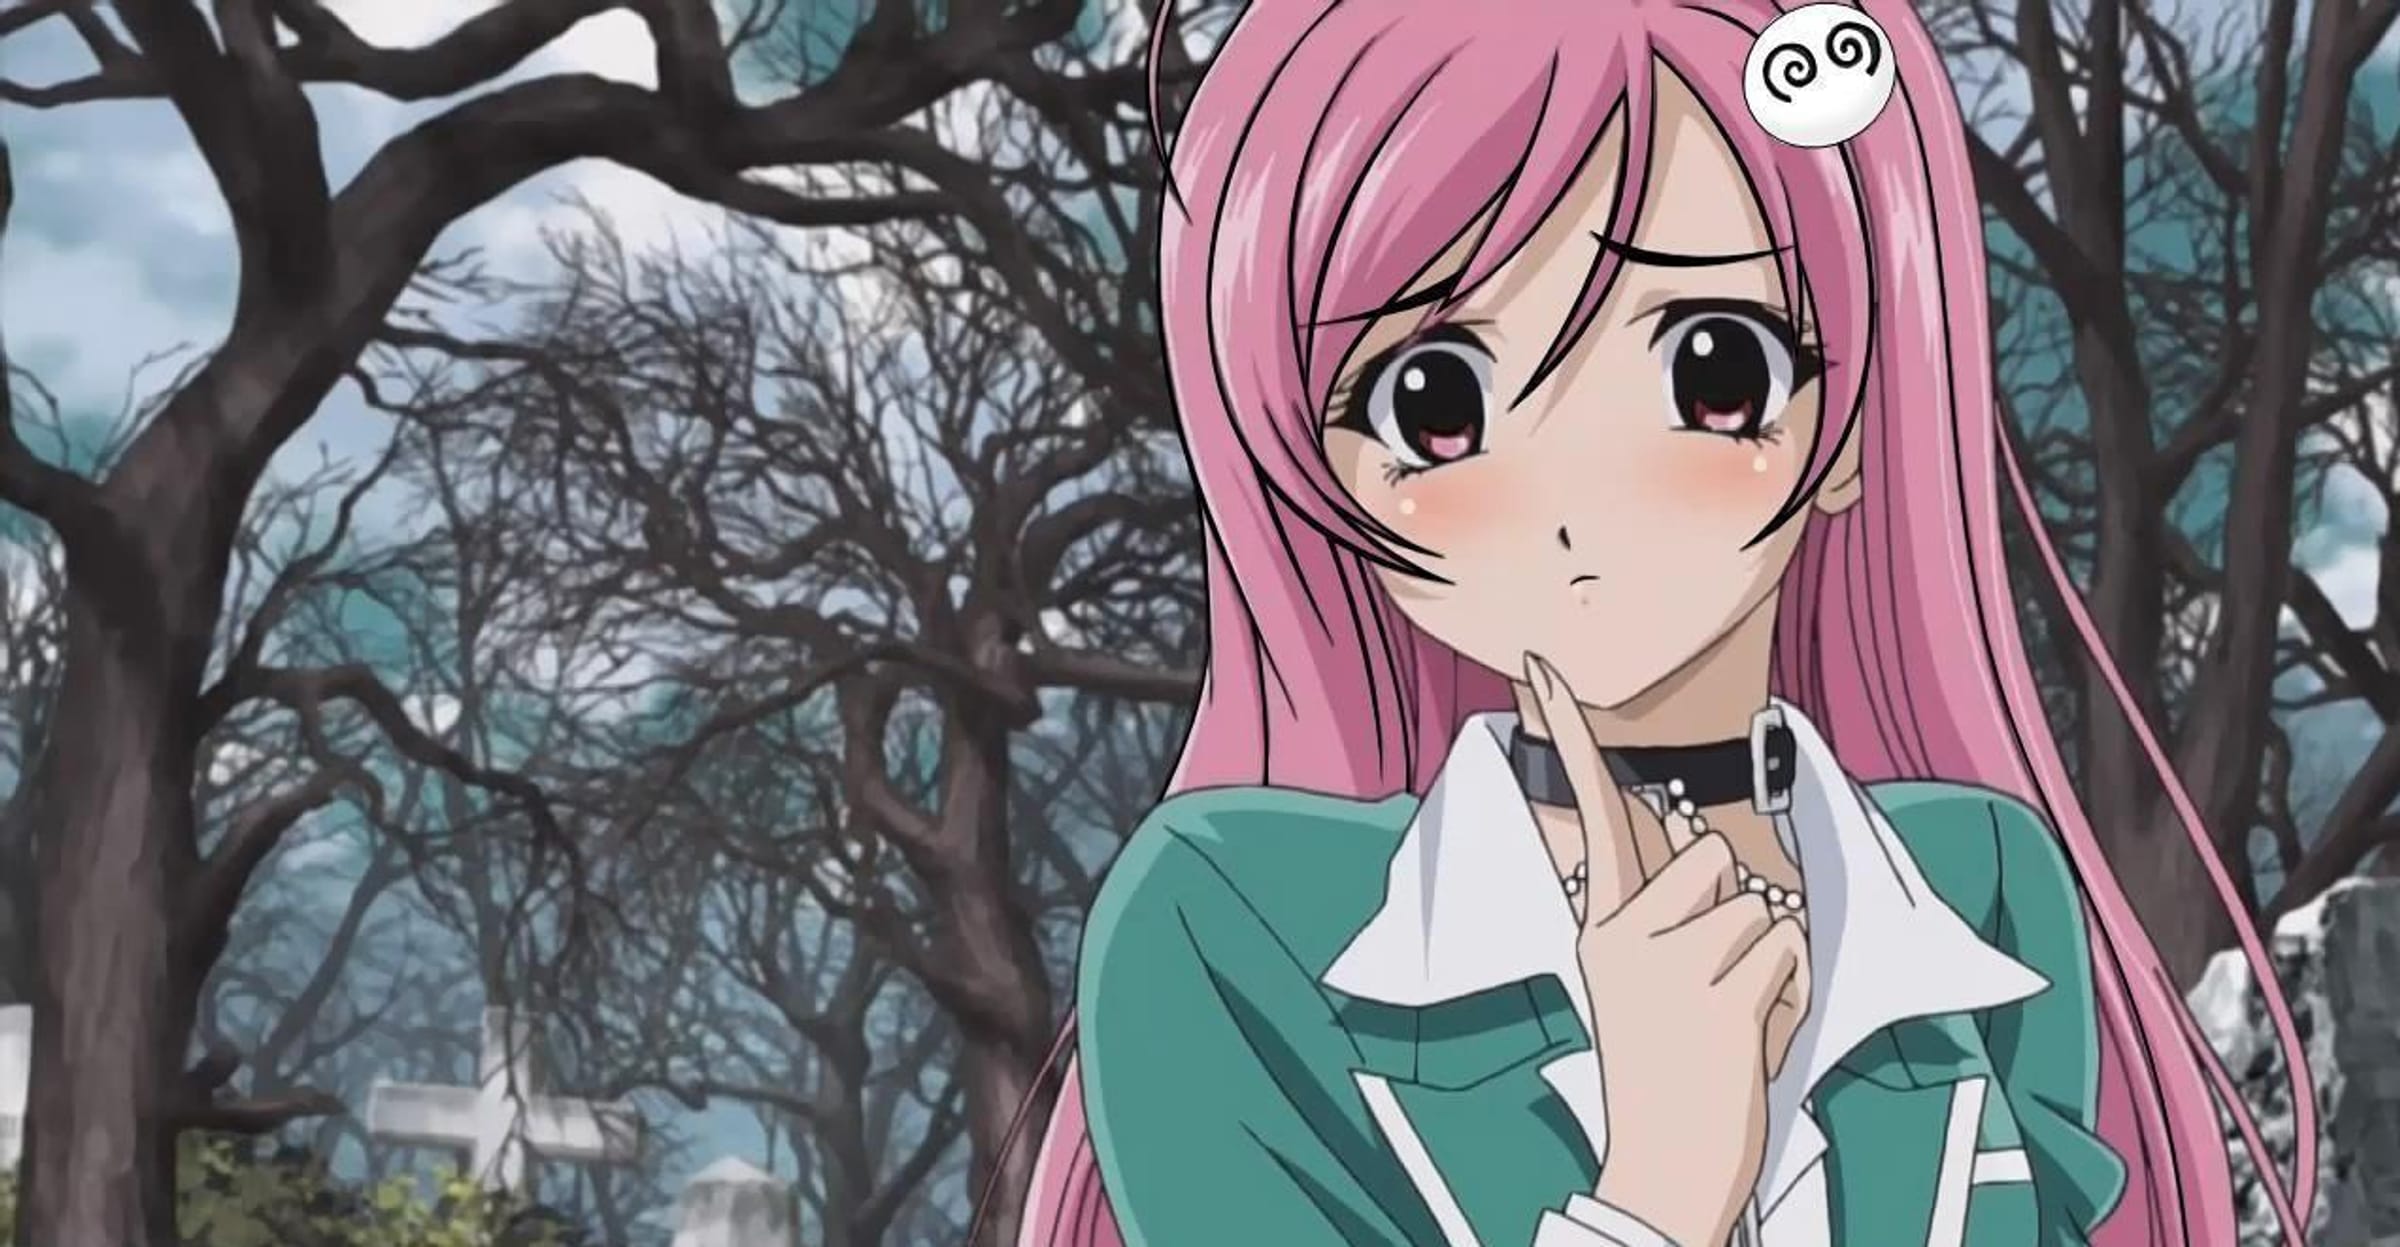 Anime Fan Art: Cute anime girls  Anime, Awesome anime, Anime artwork